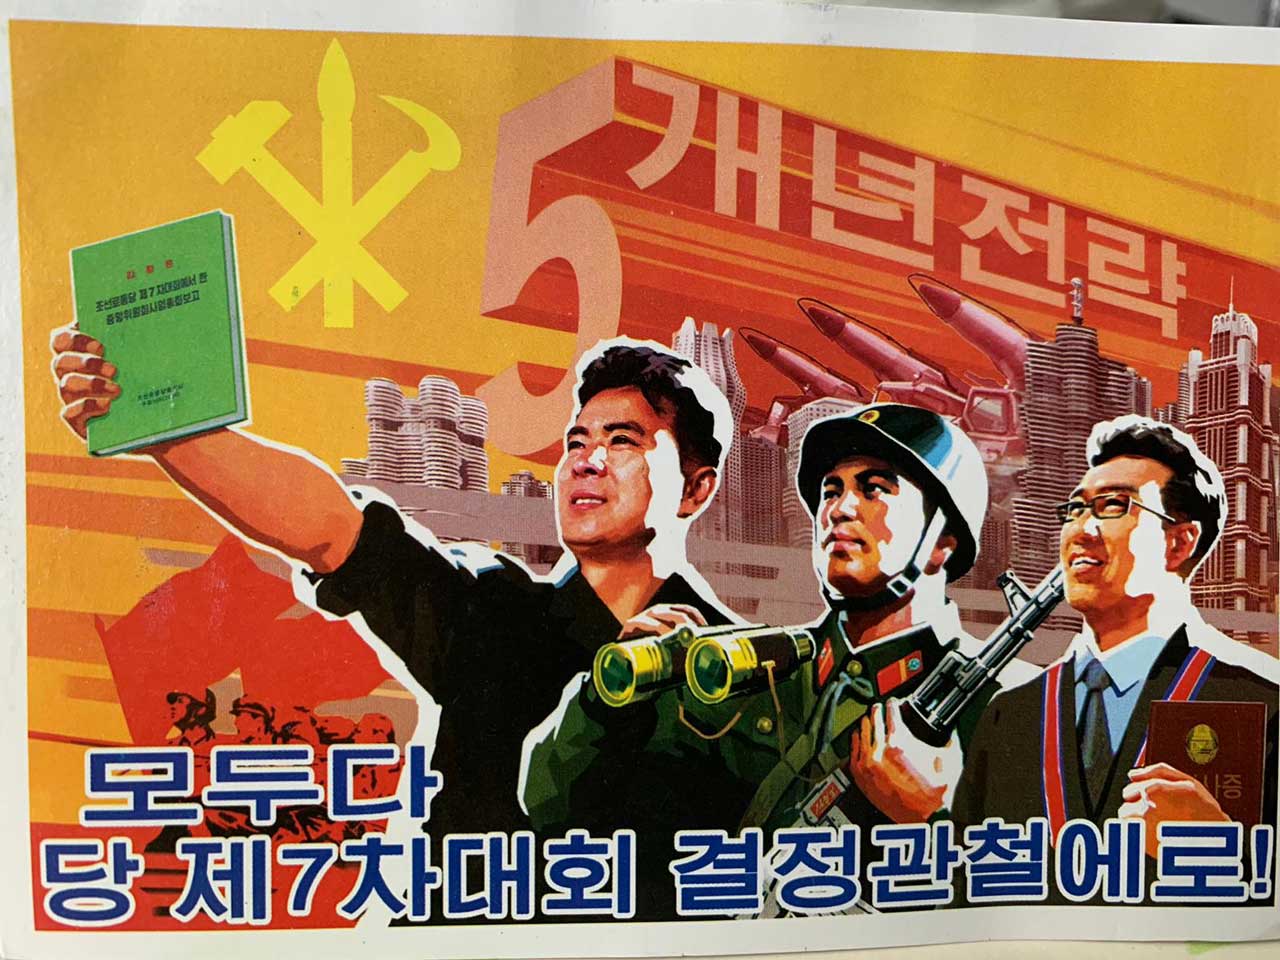 DPRK - Postcards